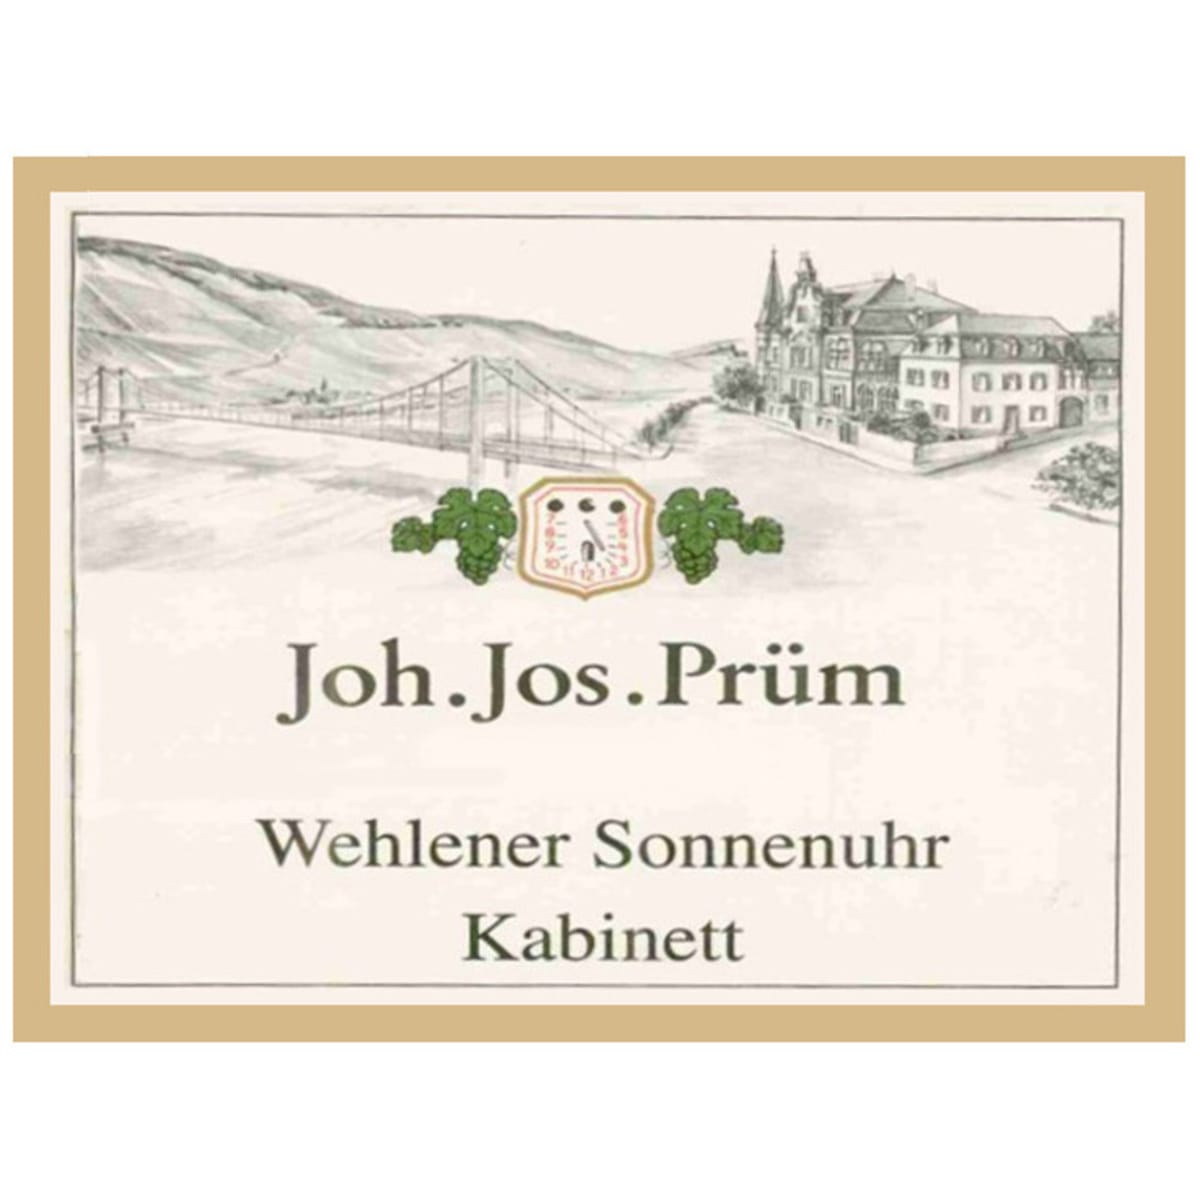 J.J. Prum Wehlener Sonnenuhr Riesling Kabinett 2007 Front Label